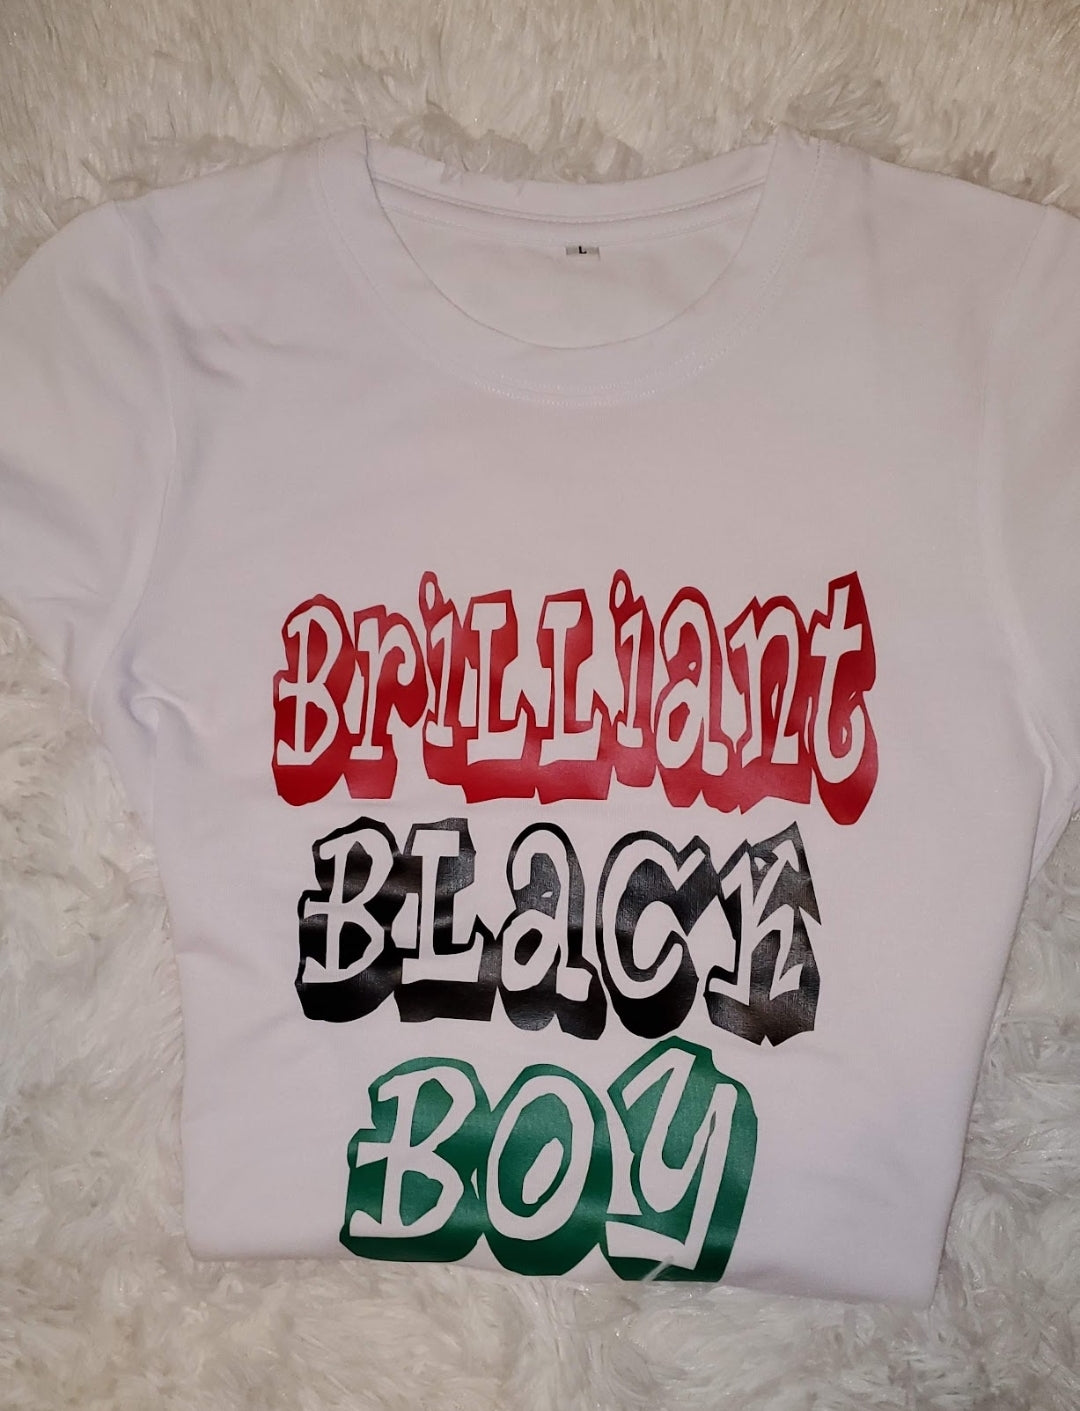 Youth Black History Shirts